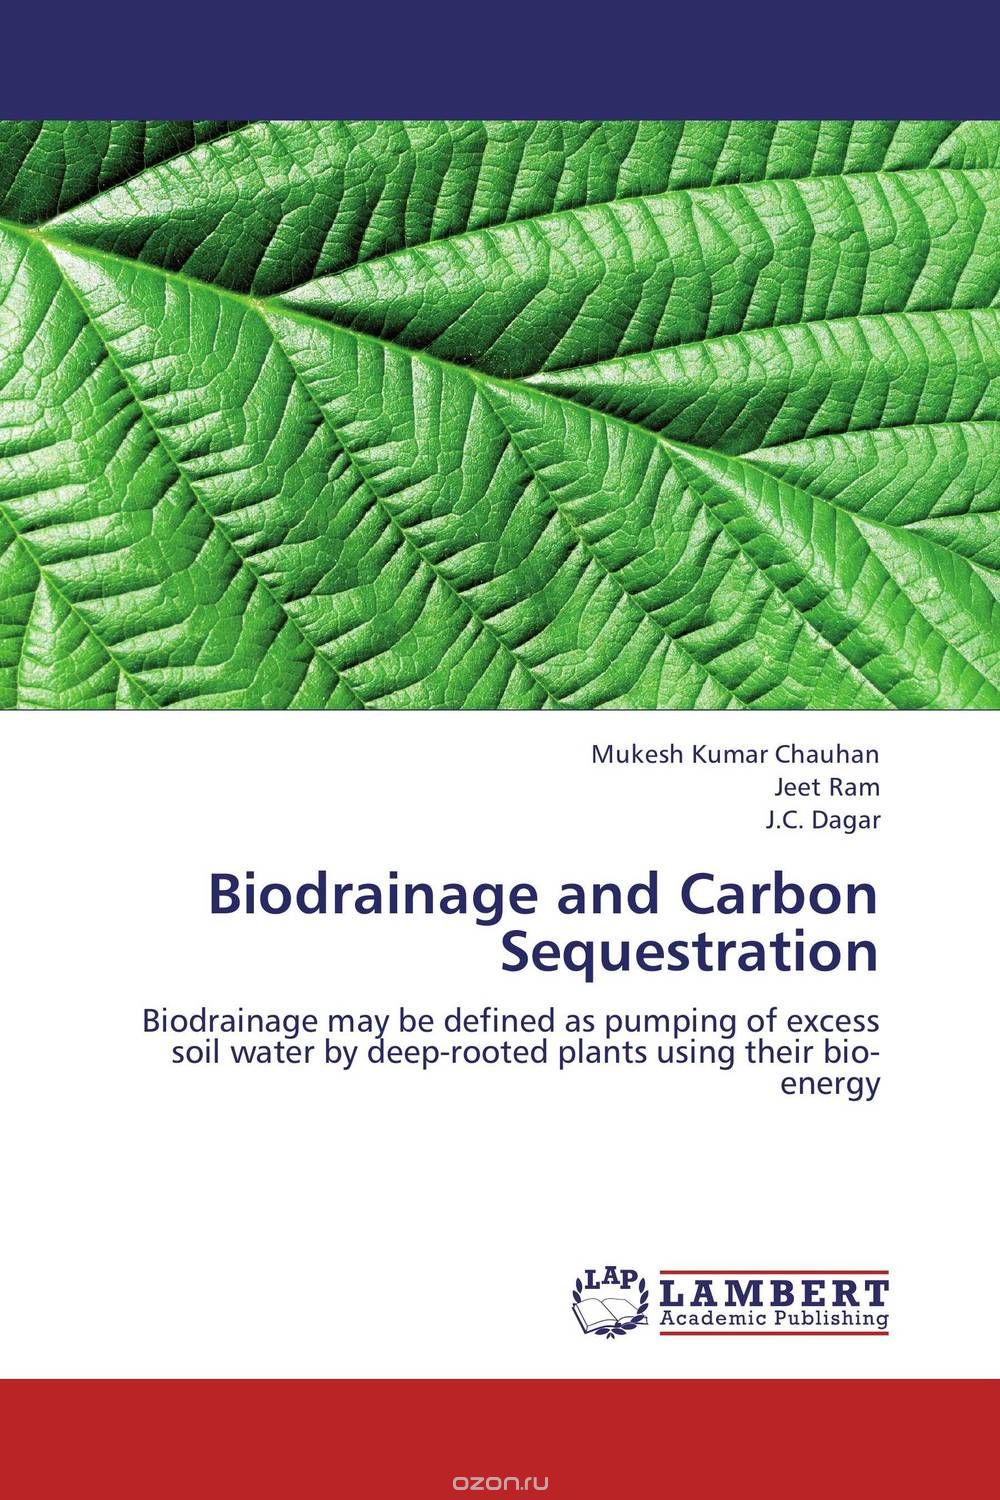 Скачать книгу "Biodrainage and Carbon Sequestration"